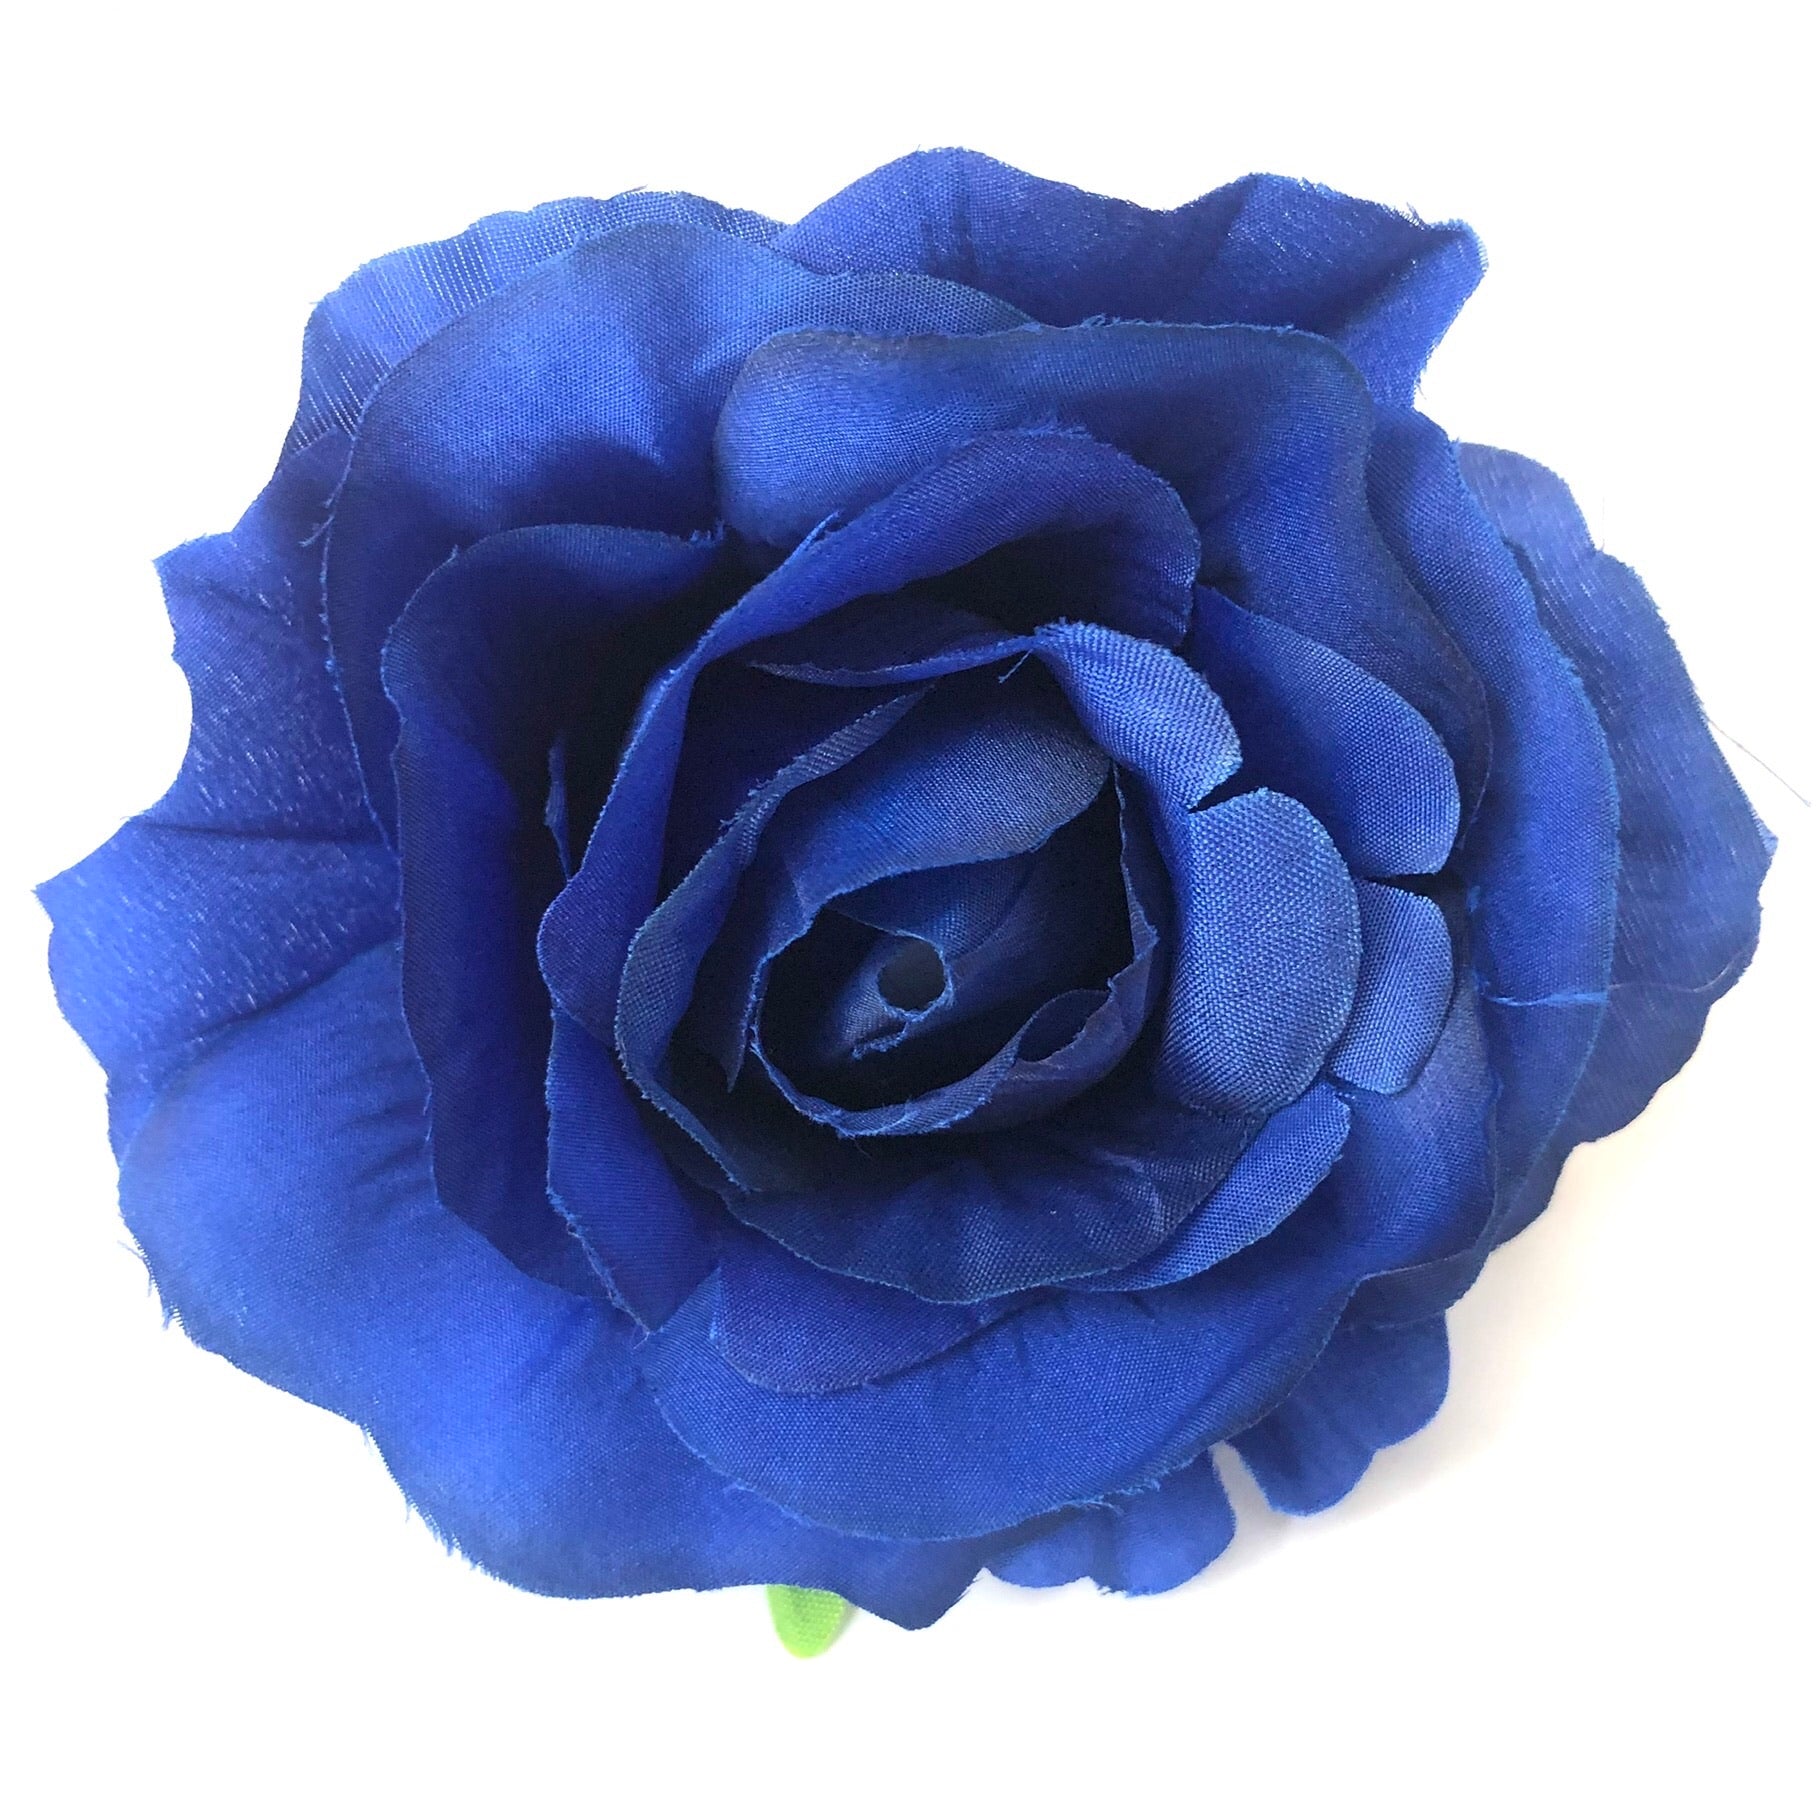 Artificial Silk Flower Head - Royal Blue Rose Style 117 - 1pc